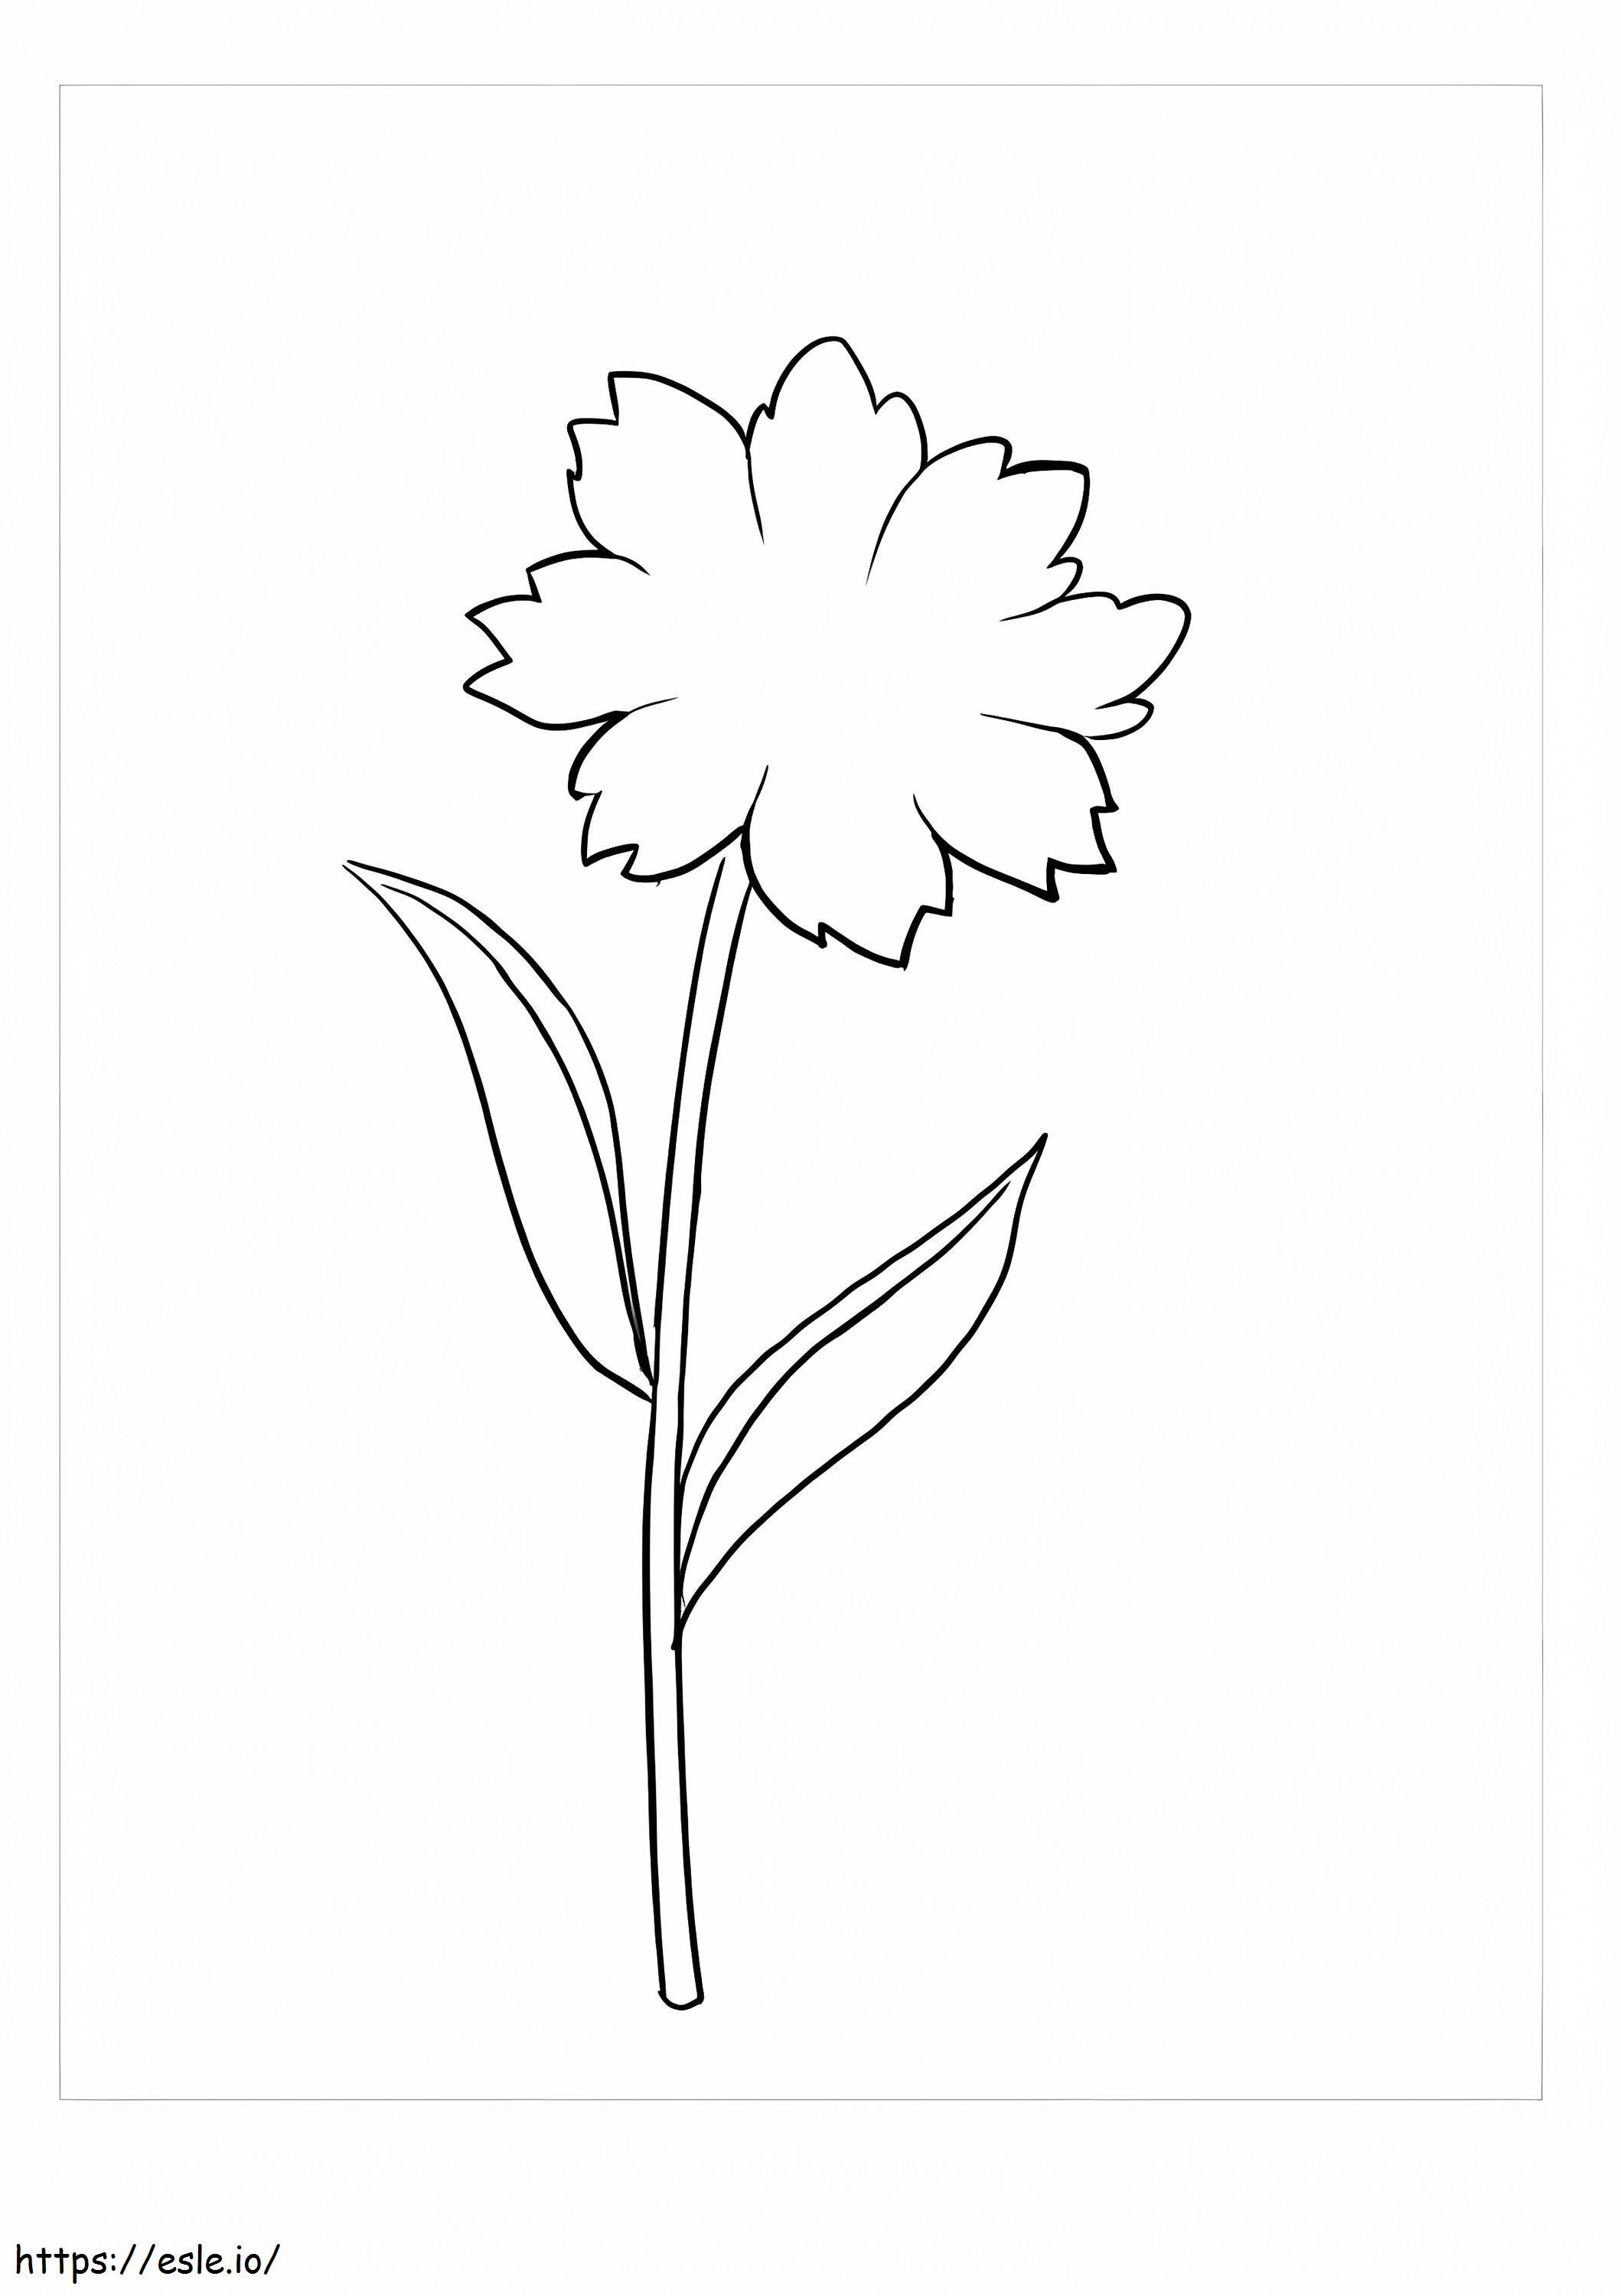 Gran Trillium coloring page